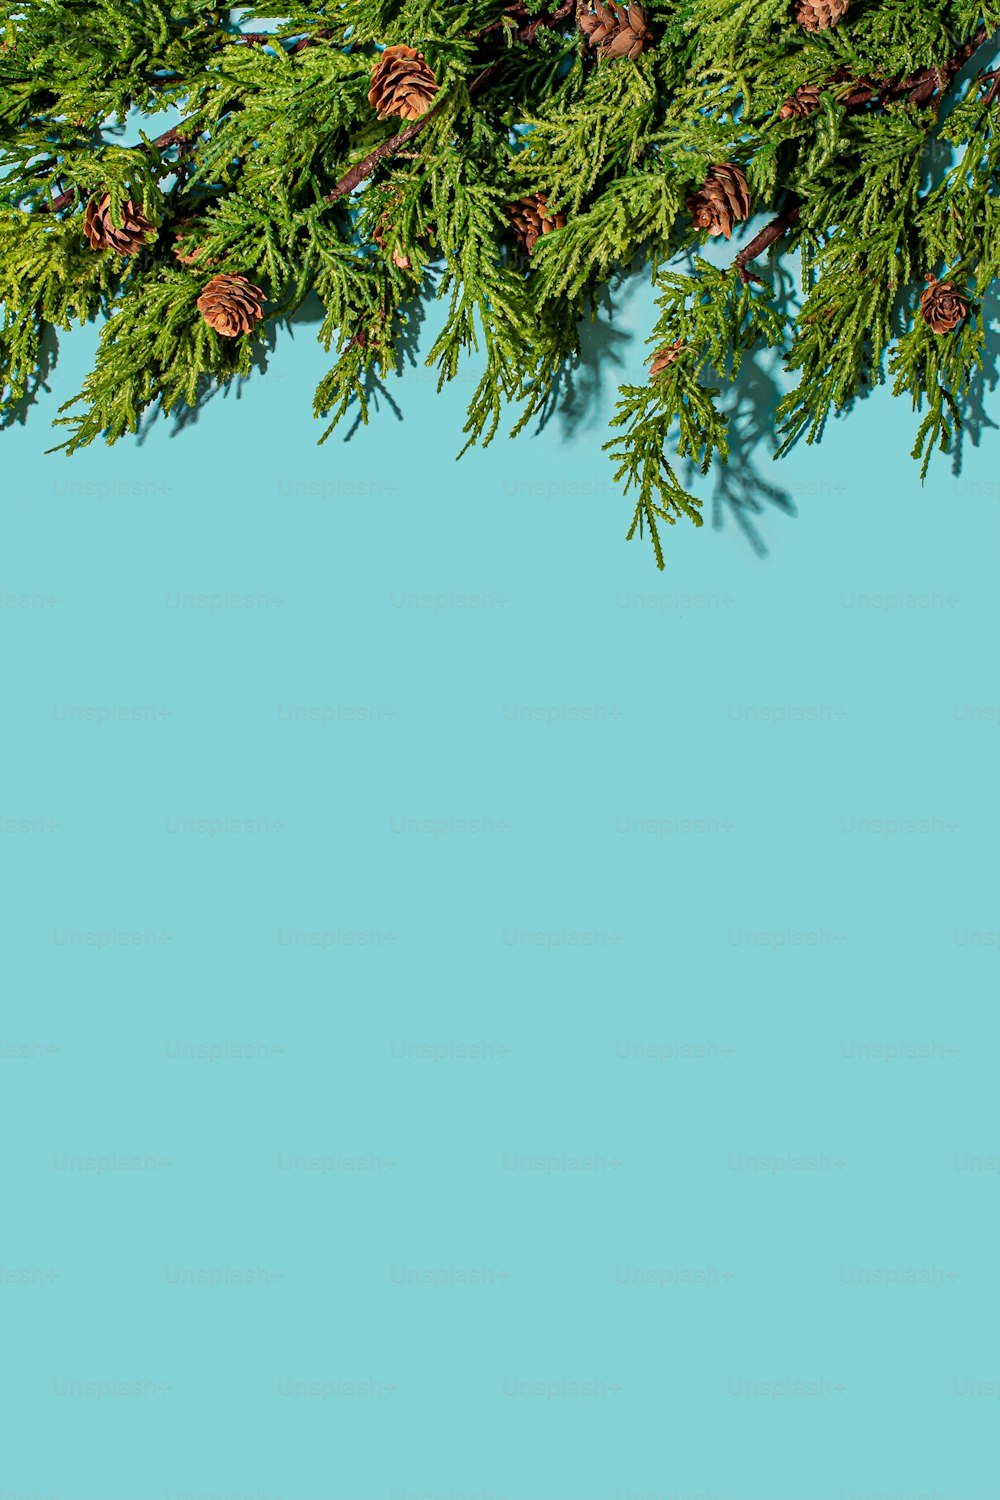 un fondo azul con conos de pino y ramas